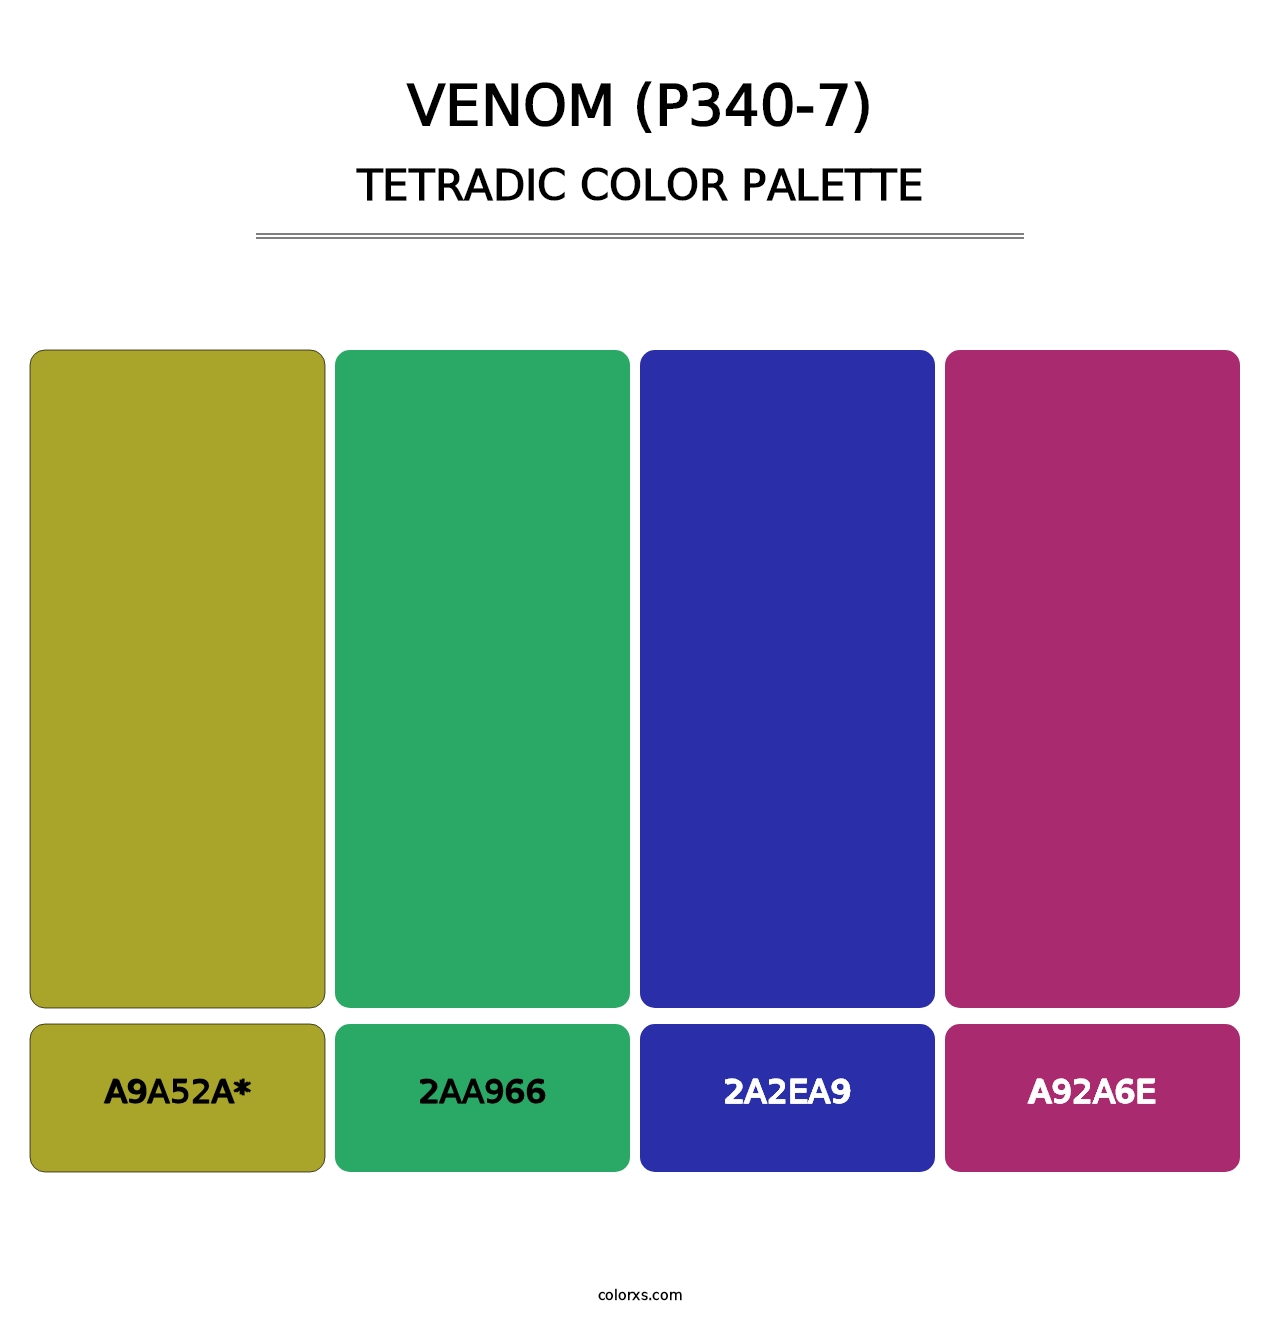 Venom (P340-7) - Tetradic Color Palette